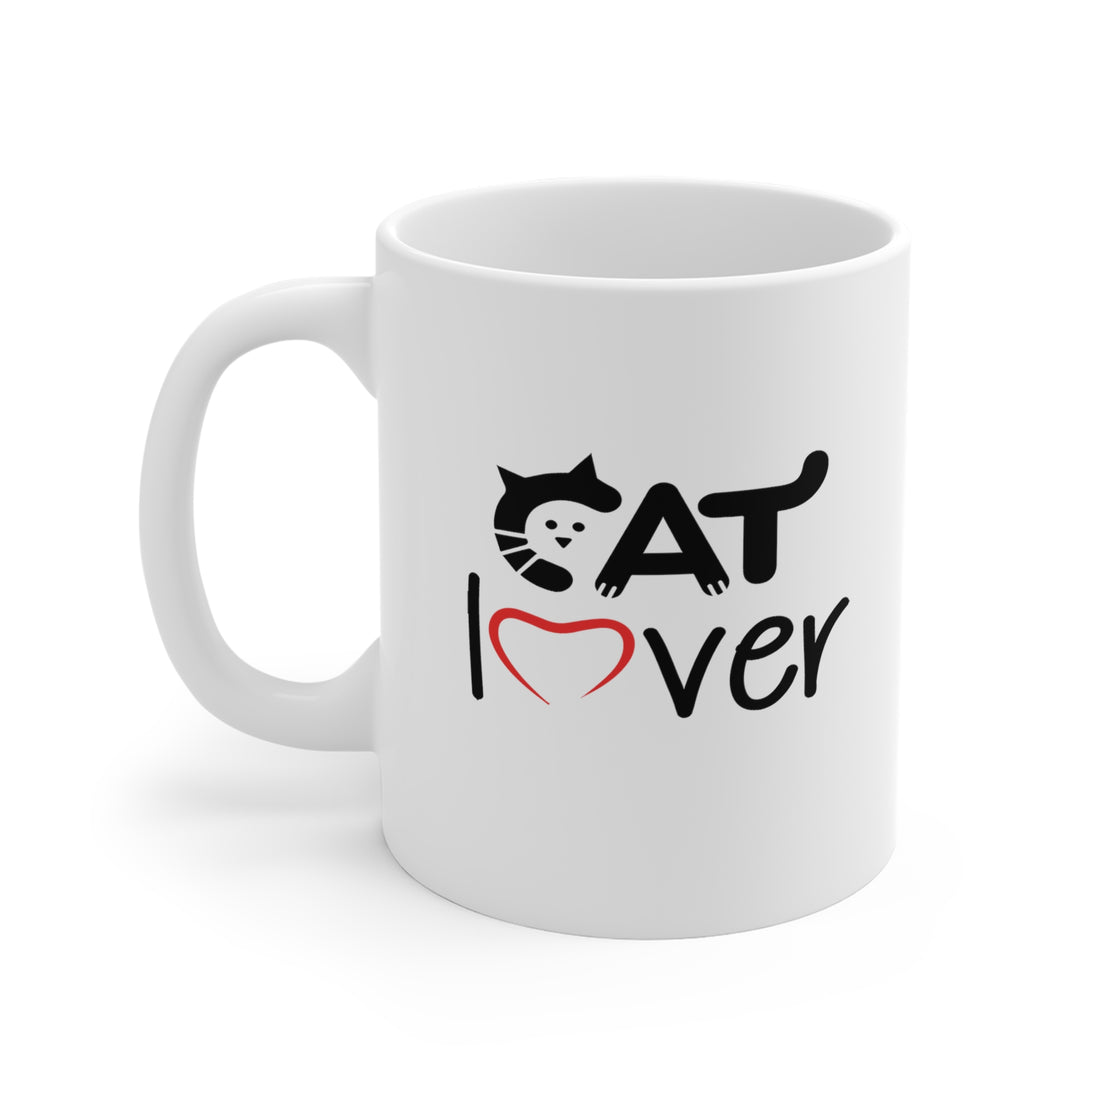 Cat Lover - White Ceramic Mug 2 sizes Available